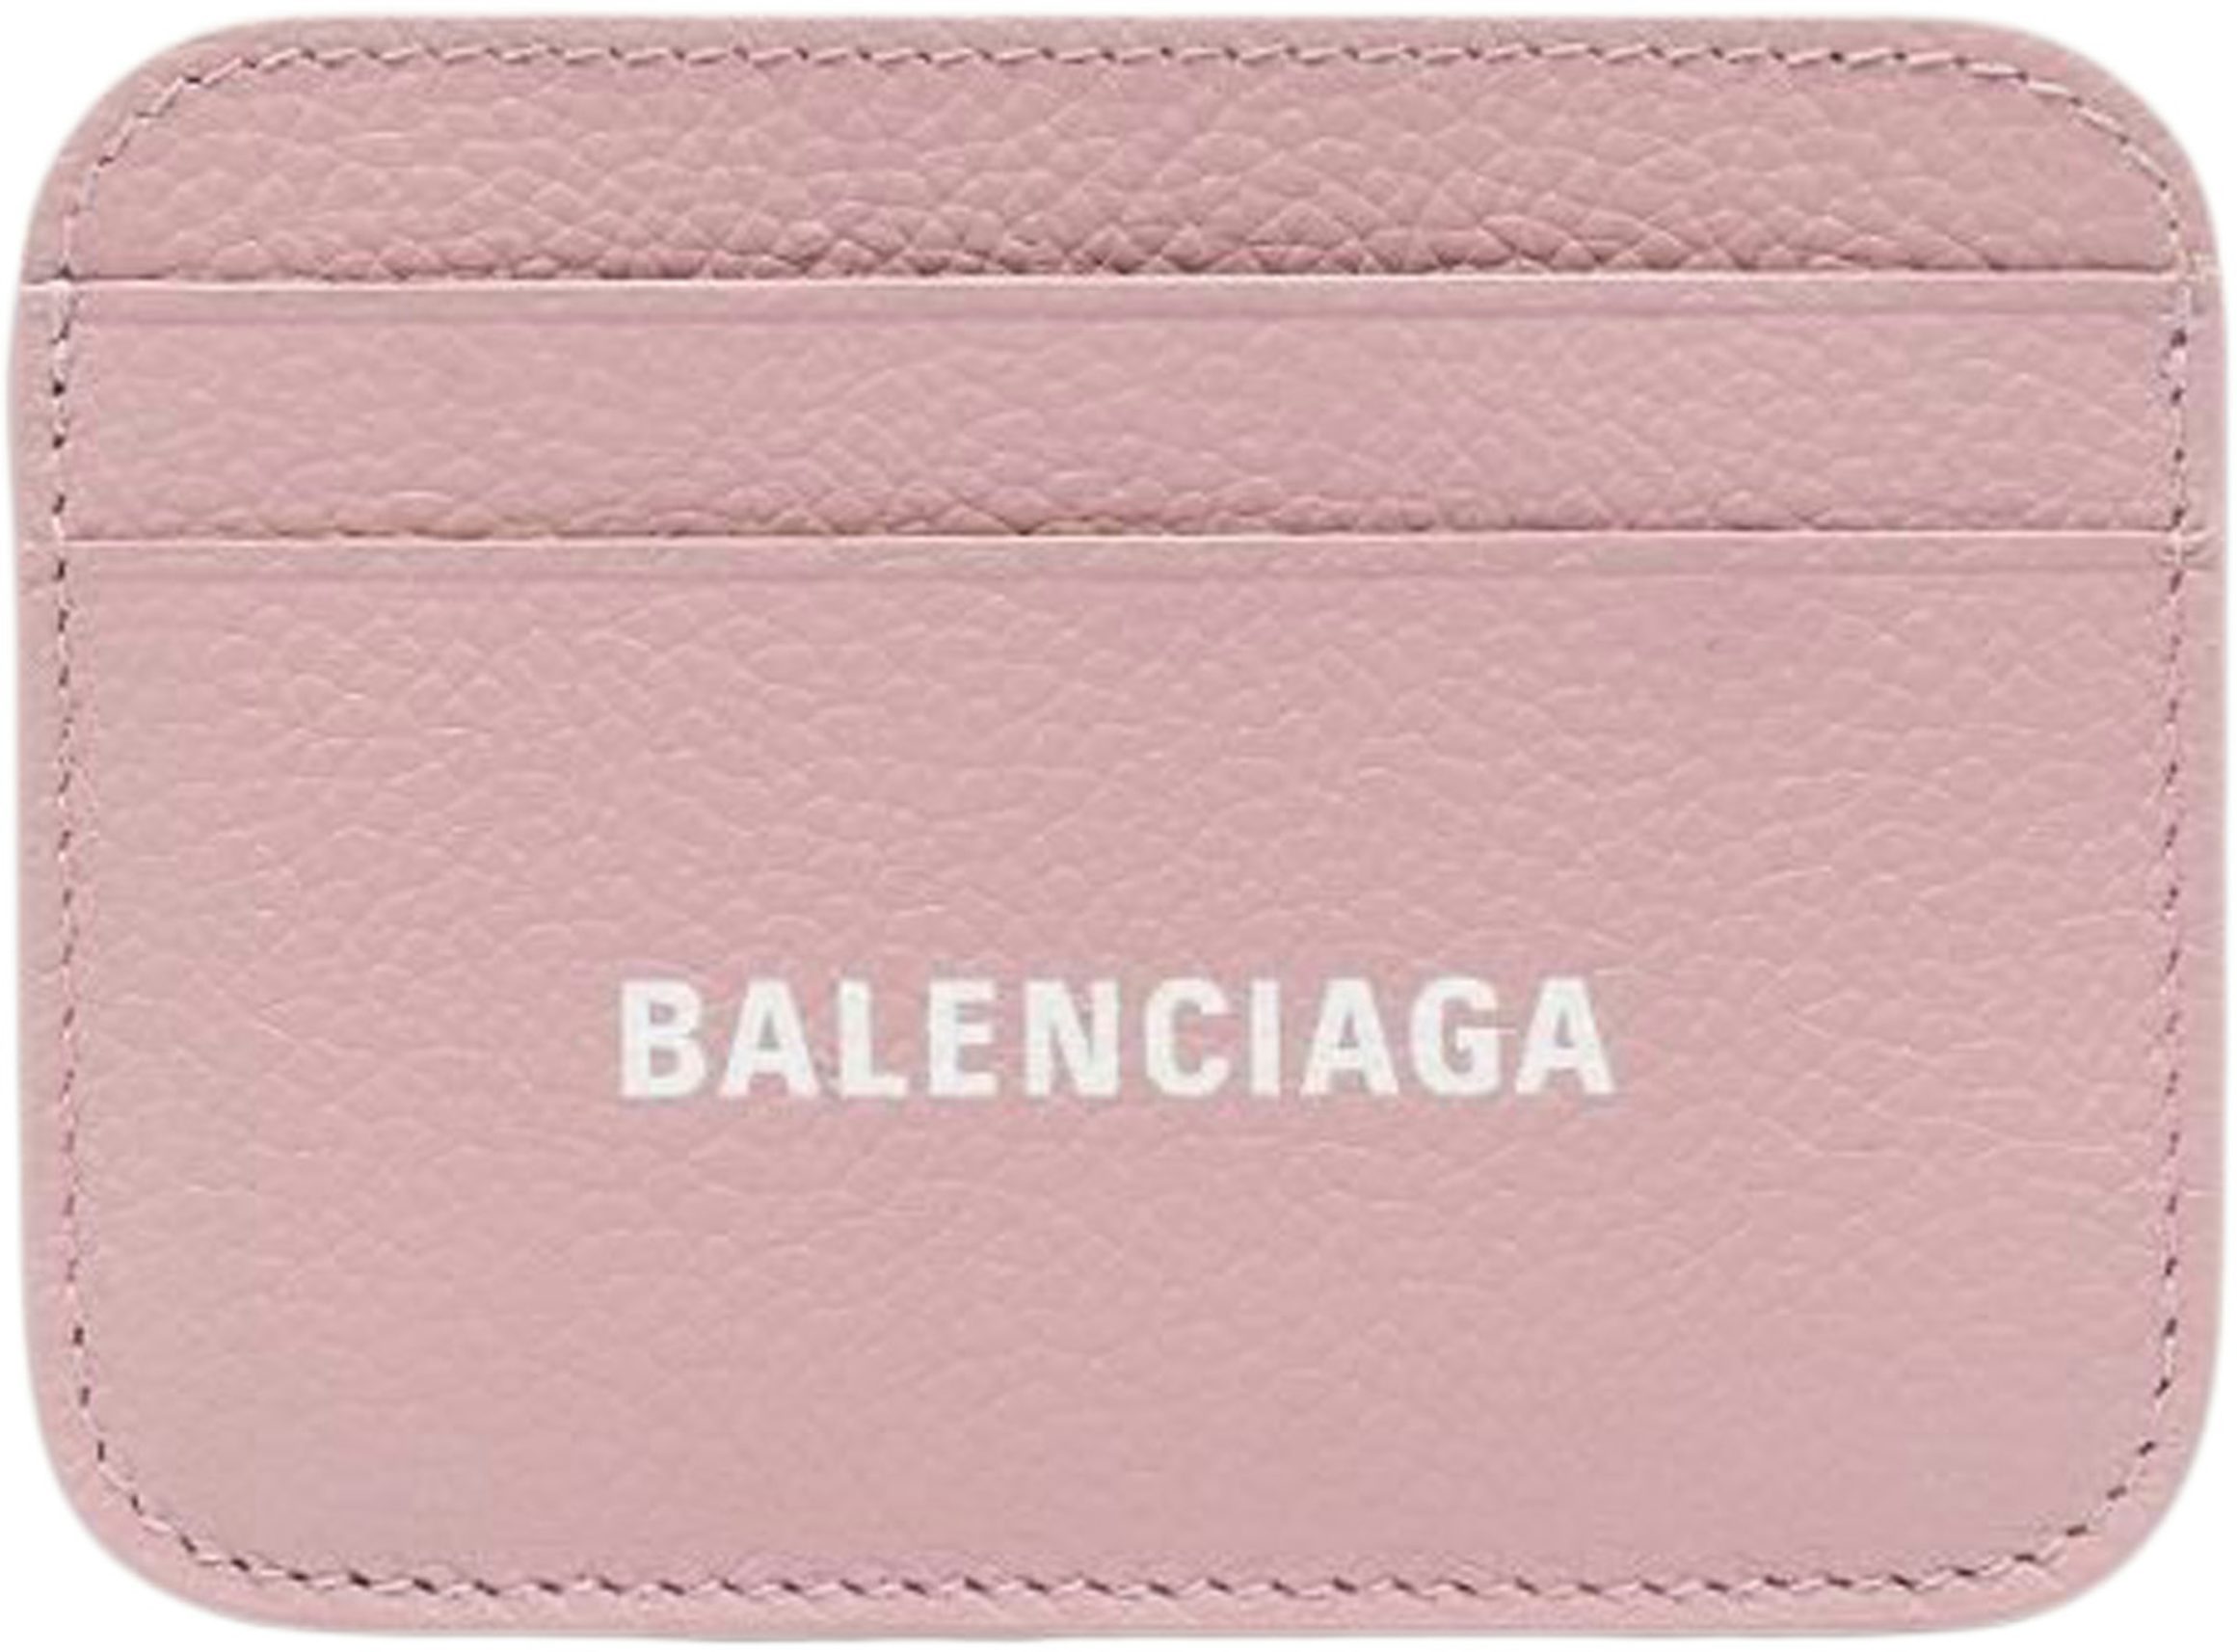 Balenciaga Cash Phone and Card Holder